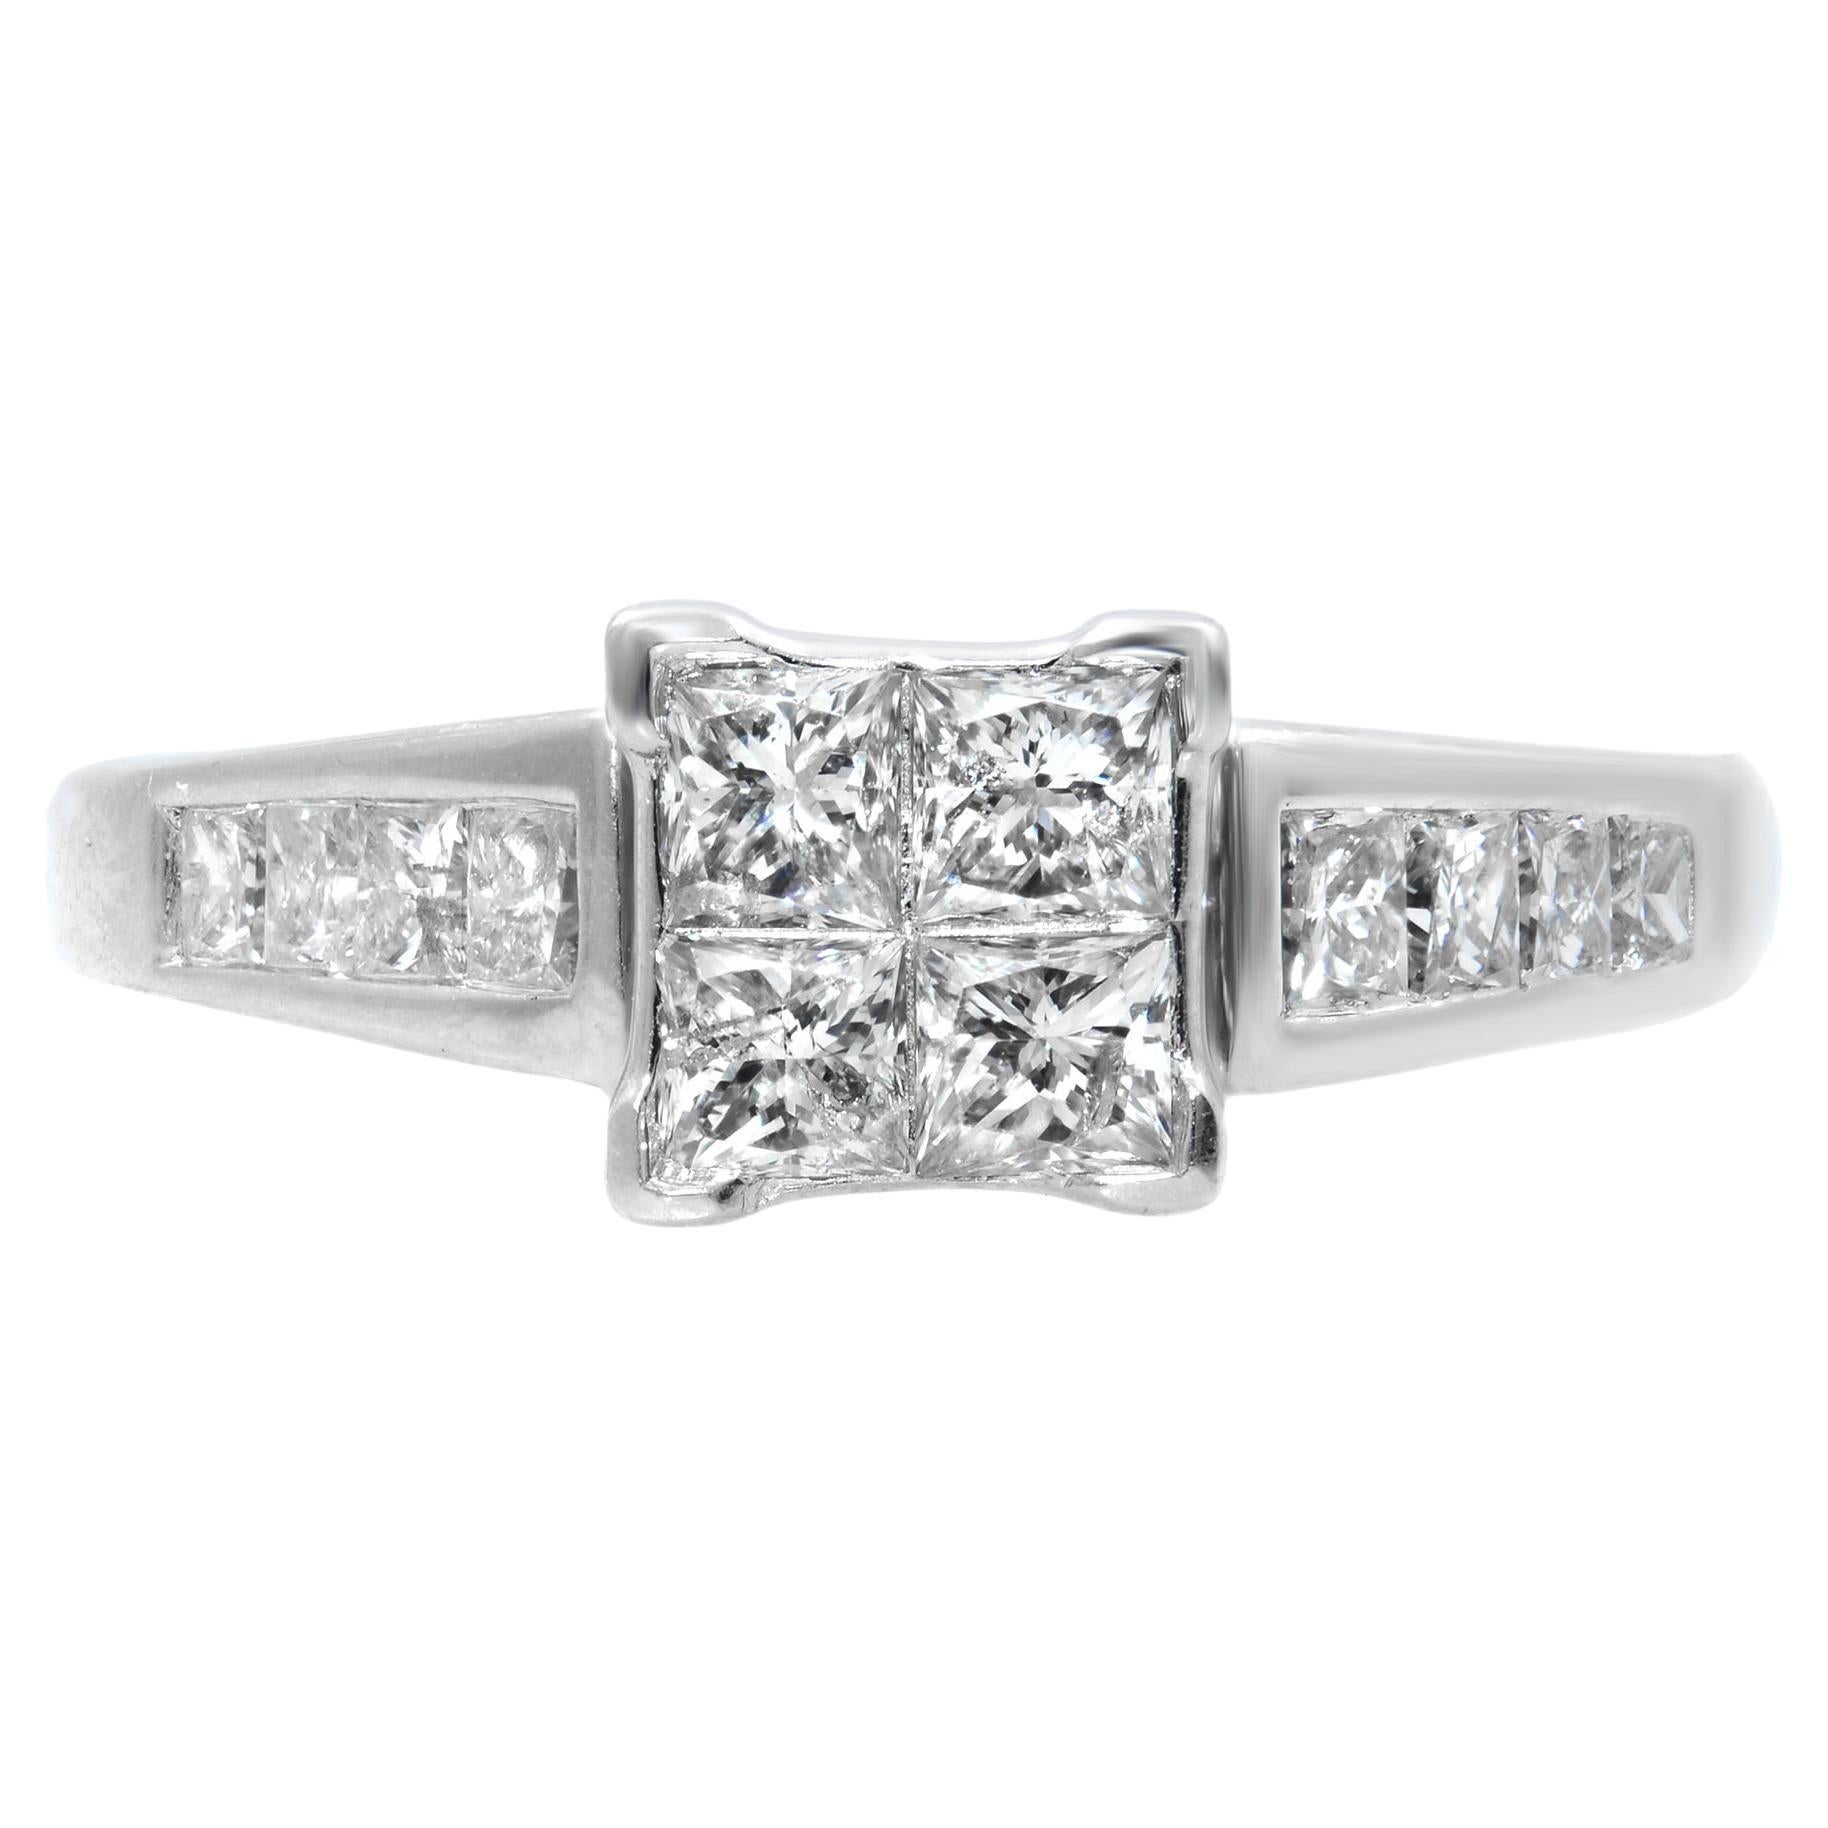 Rachel Koen 1.00Cttw Princess Cut Diamond Engagement Ring 14K White Gold Size 6 For Sale